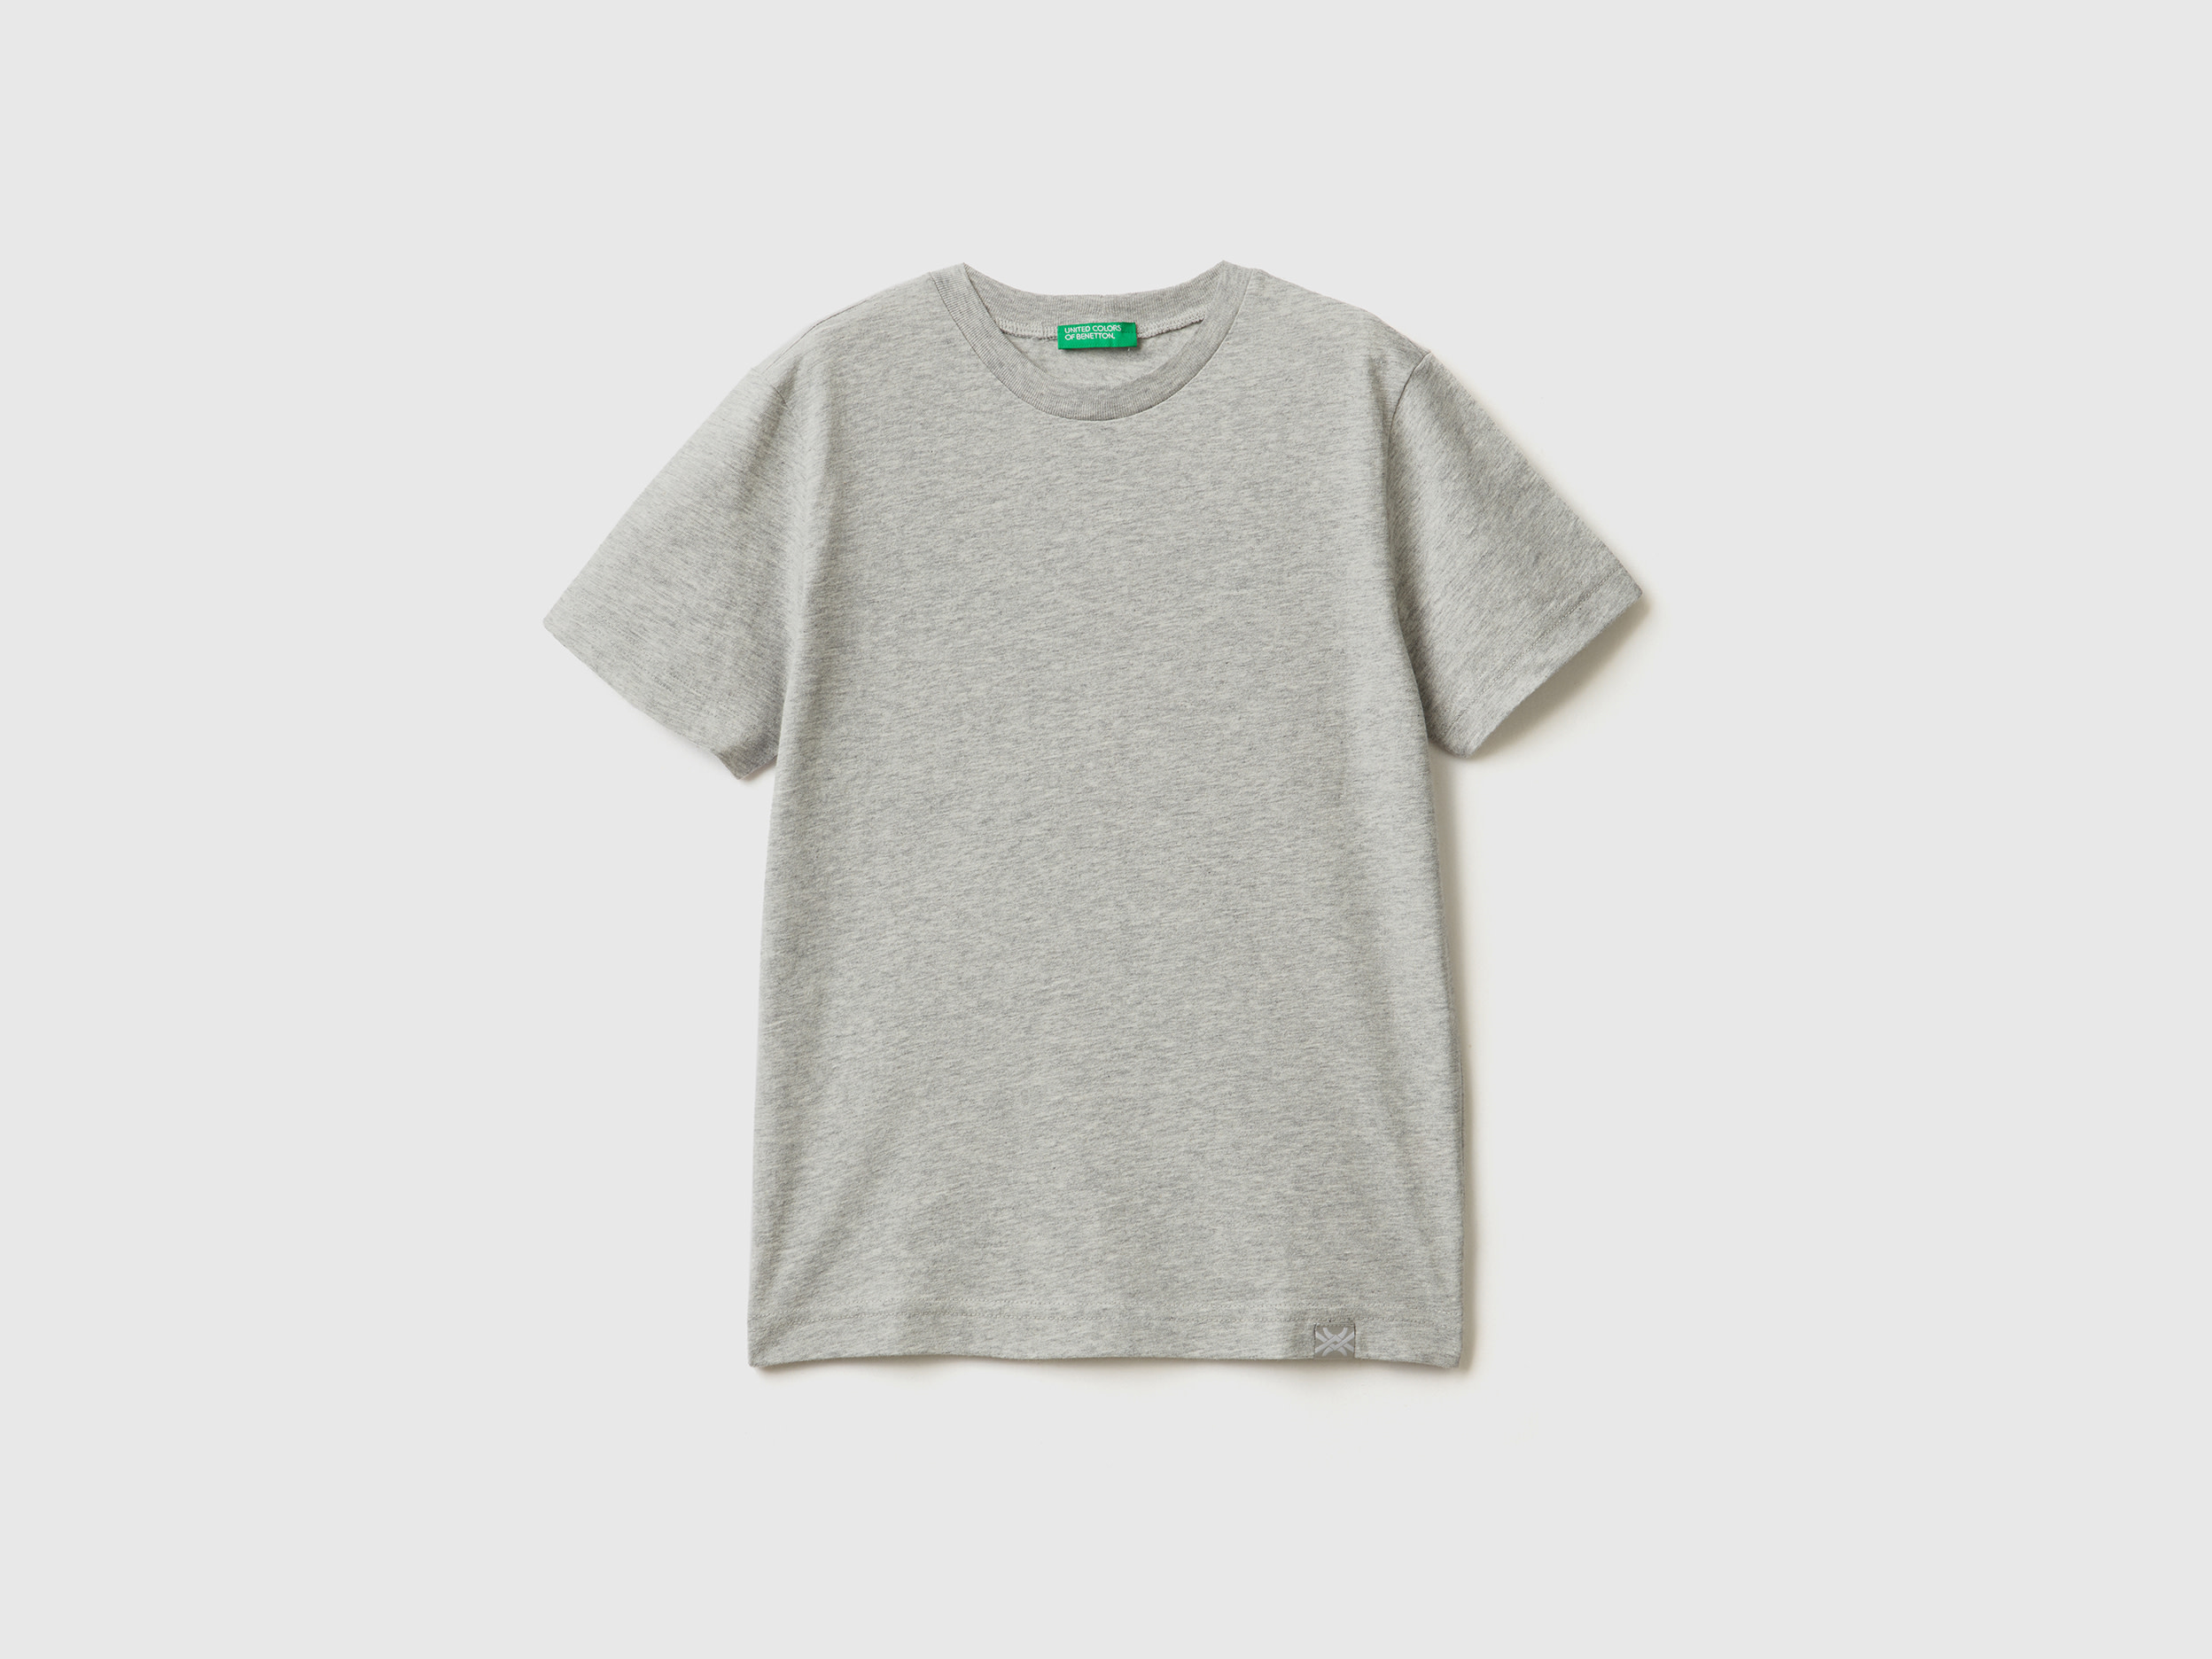 Image of Benetton, Organic Cotton T-shirt, size L, Light Gray, Kids